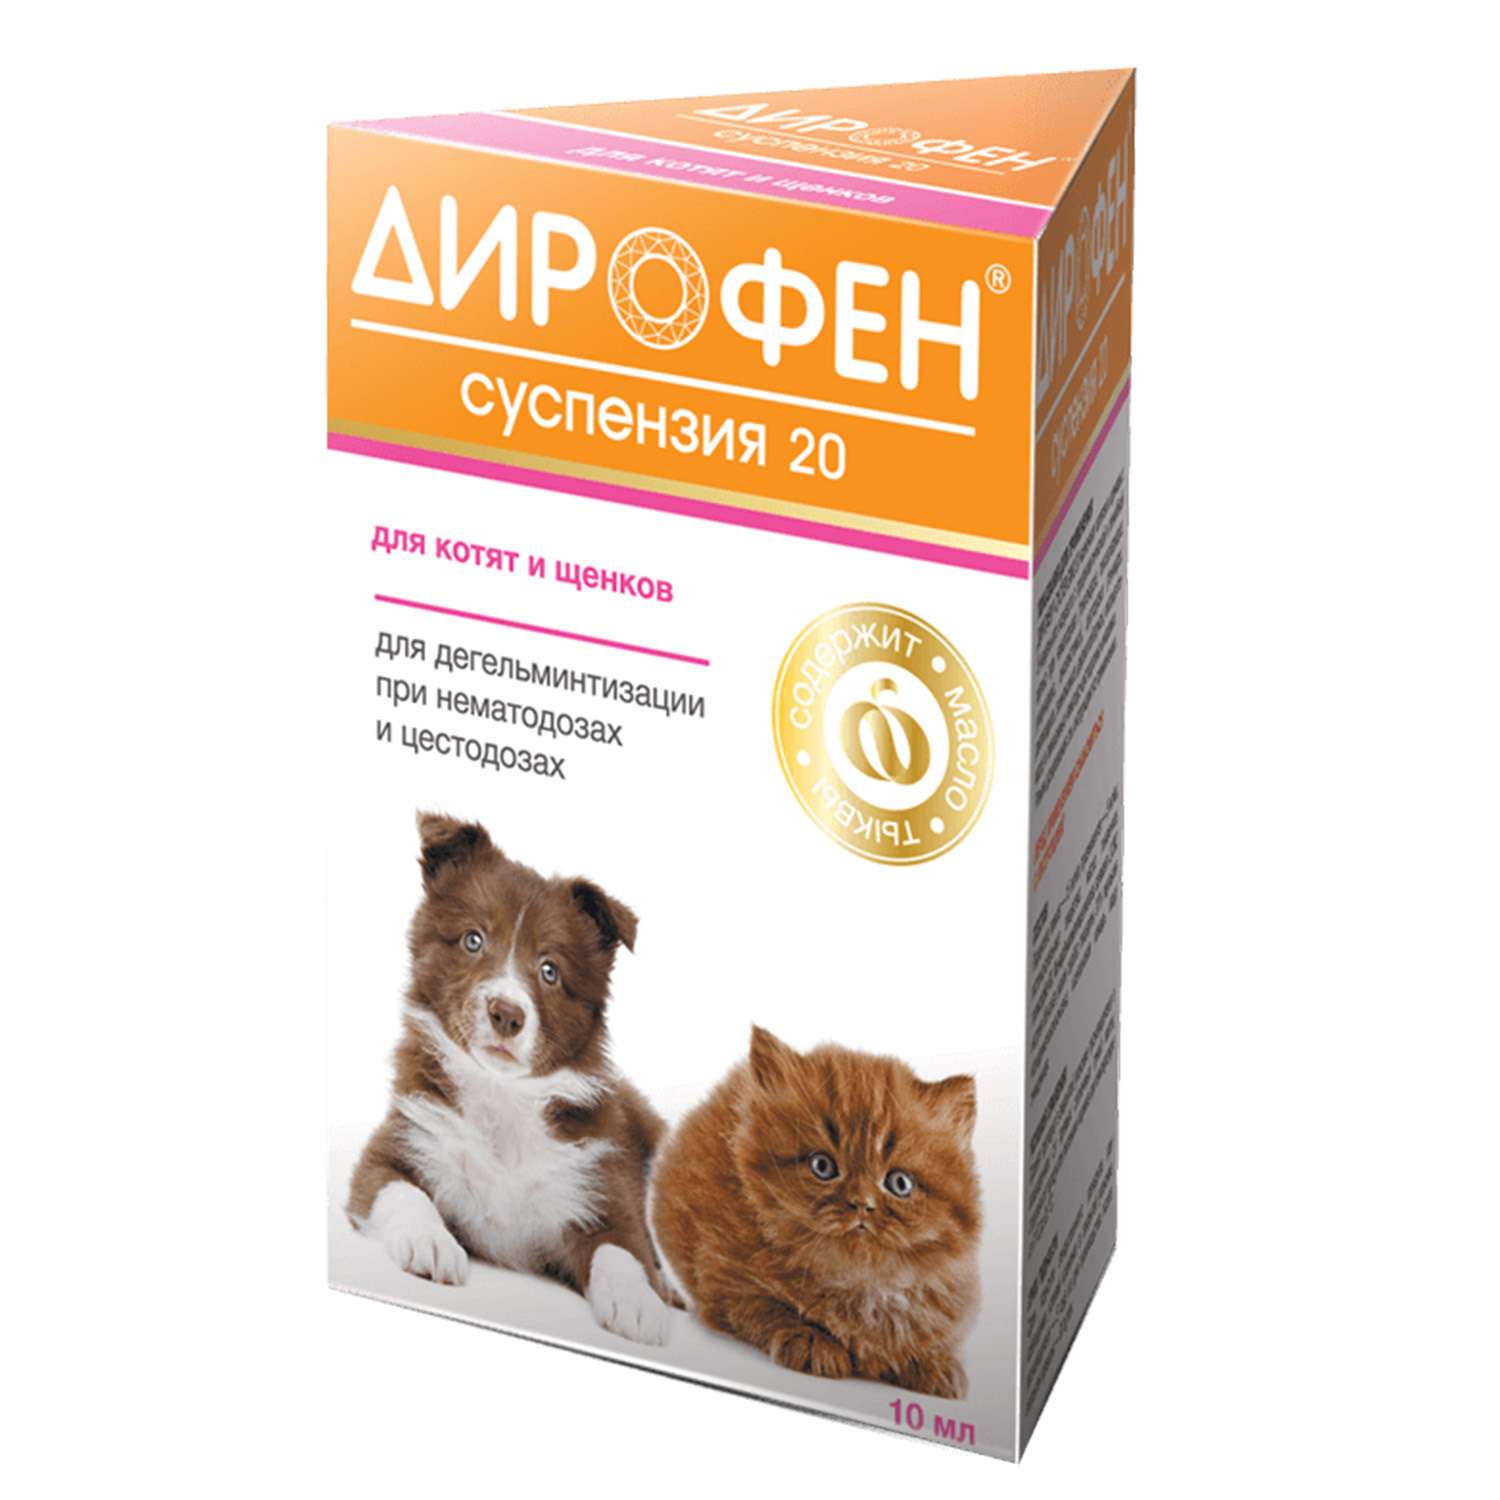 Препарат противопаразитарный для котят и щенков Apicenna Дирофен-суспензия 20 10мл - фото 1